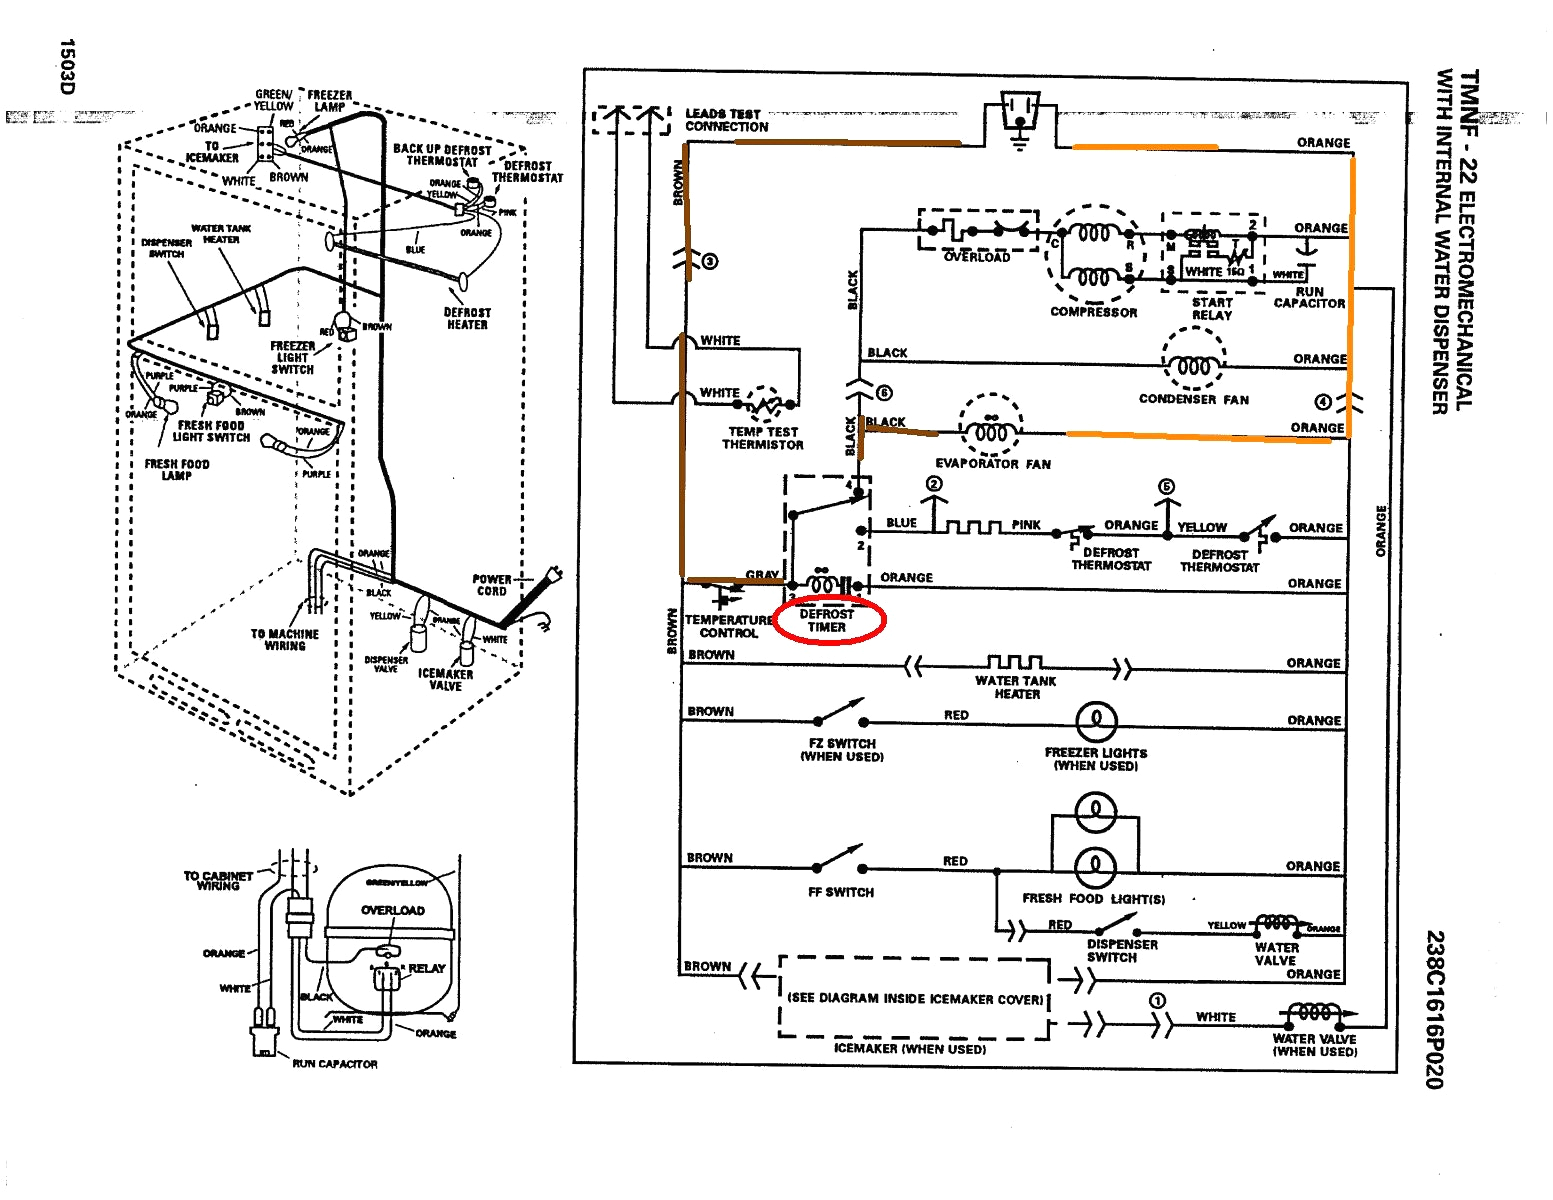 ev1 ge wiring schematic wiring diagrams brightge ev1 wire diagram wiring diagram sort ev1 ge wiring